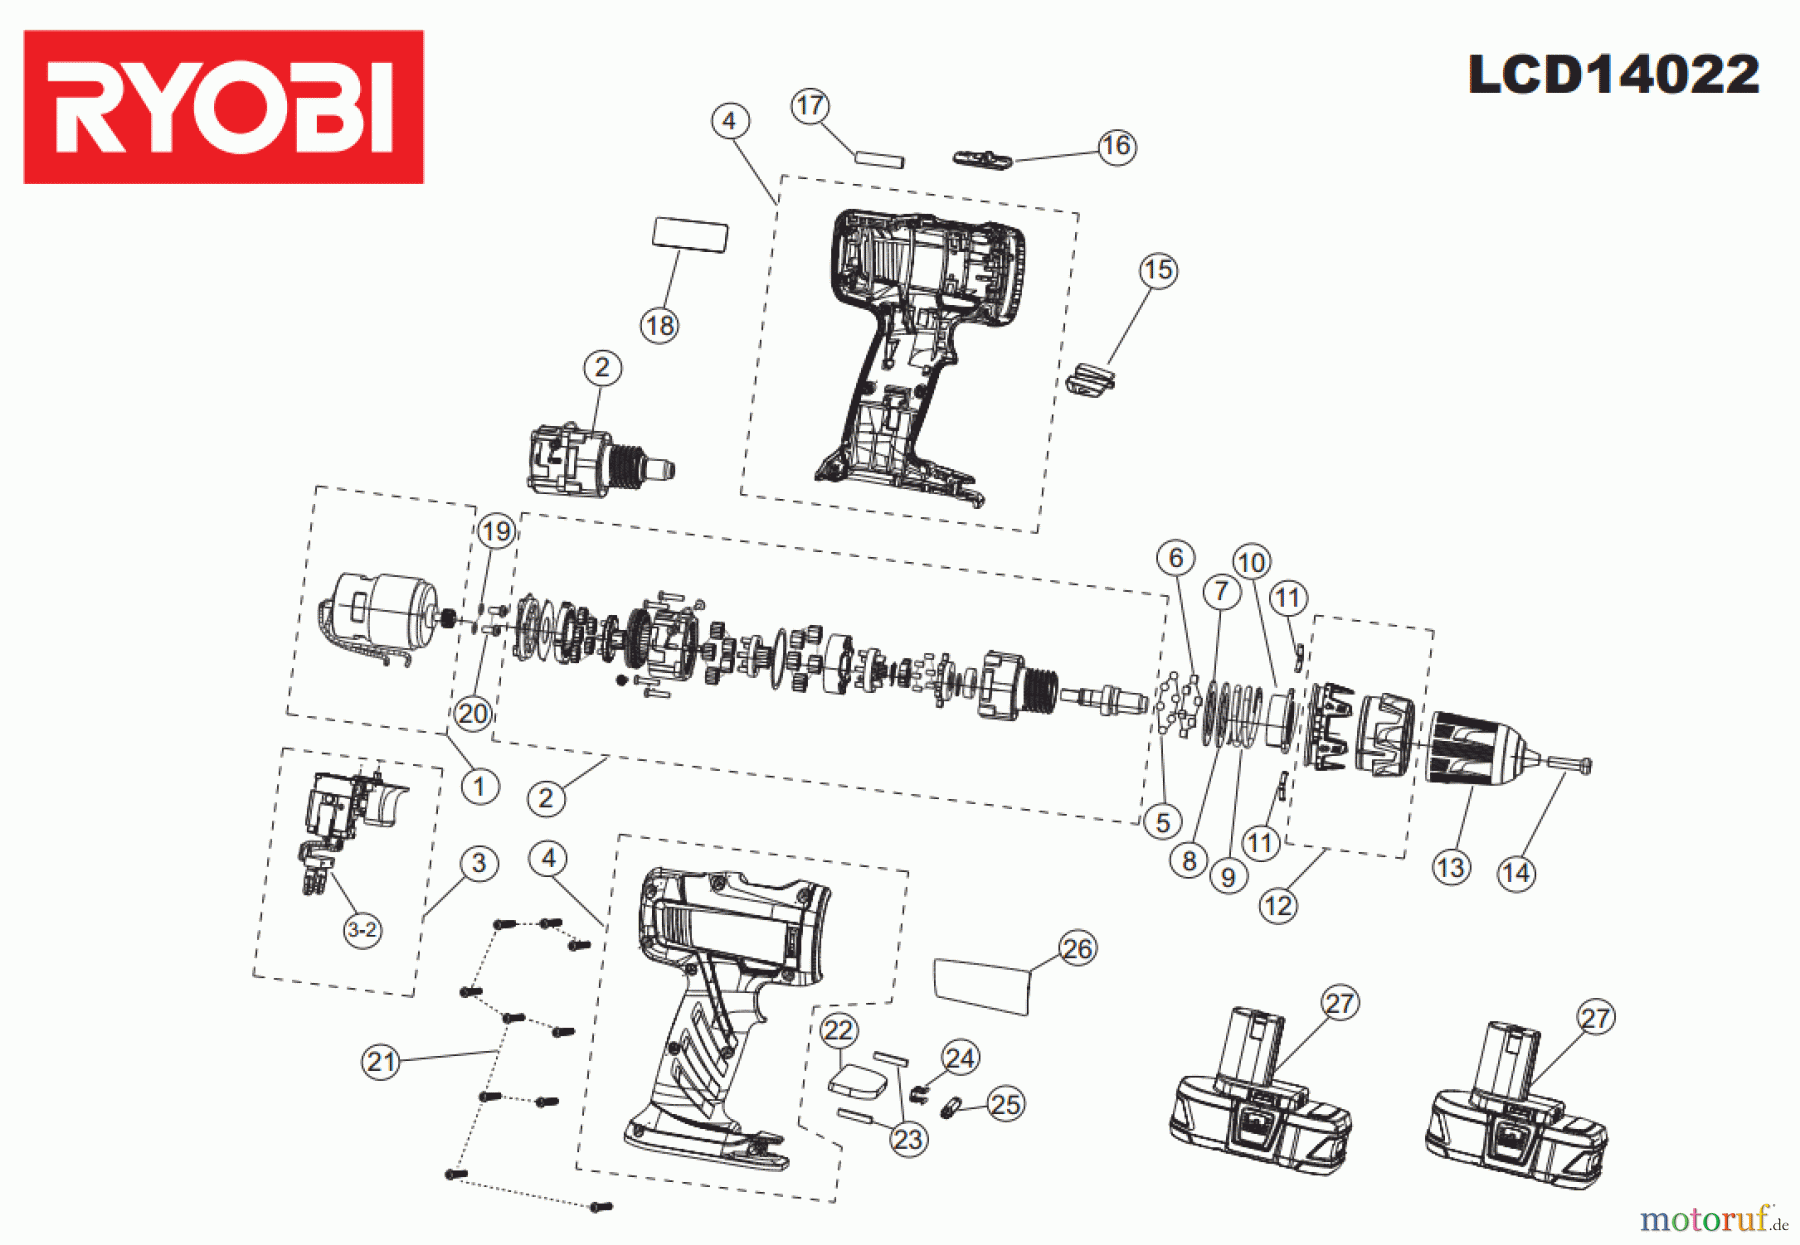  Ryobi (Schlag-)Bohrschrauber Bohrschrauber LCD14022 Seite 1